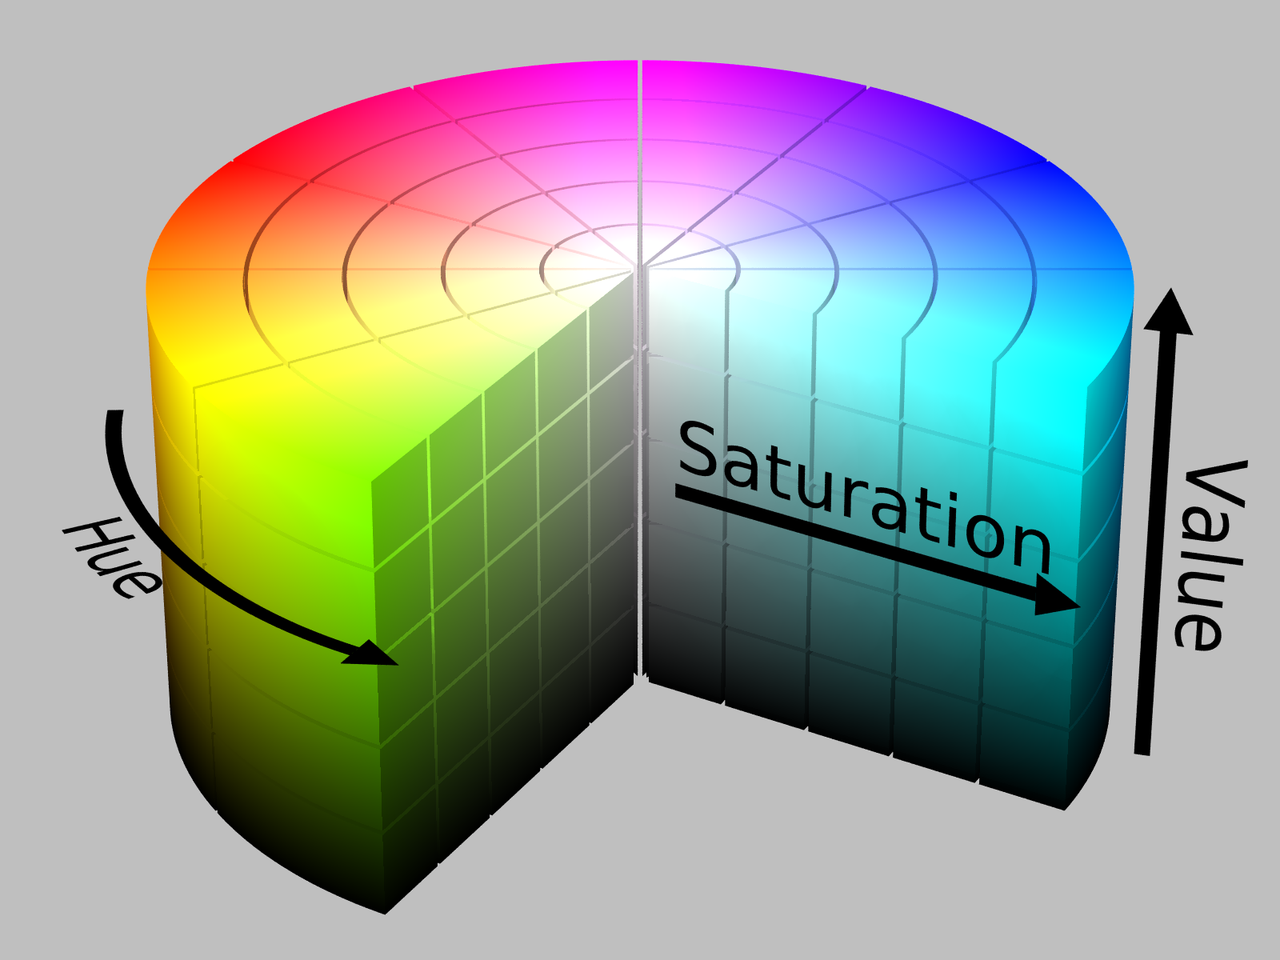 HSV 色空間の円柱モデル